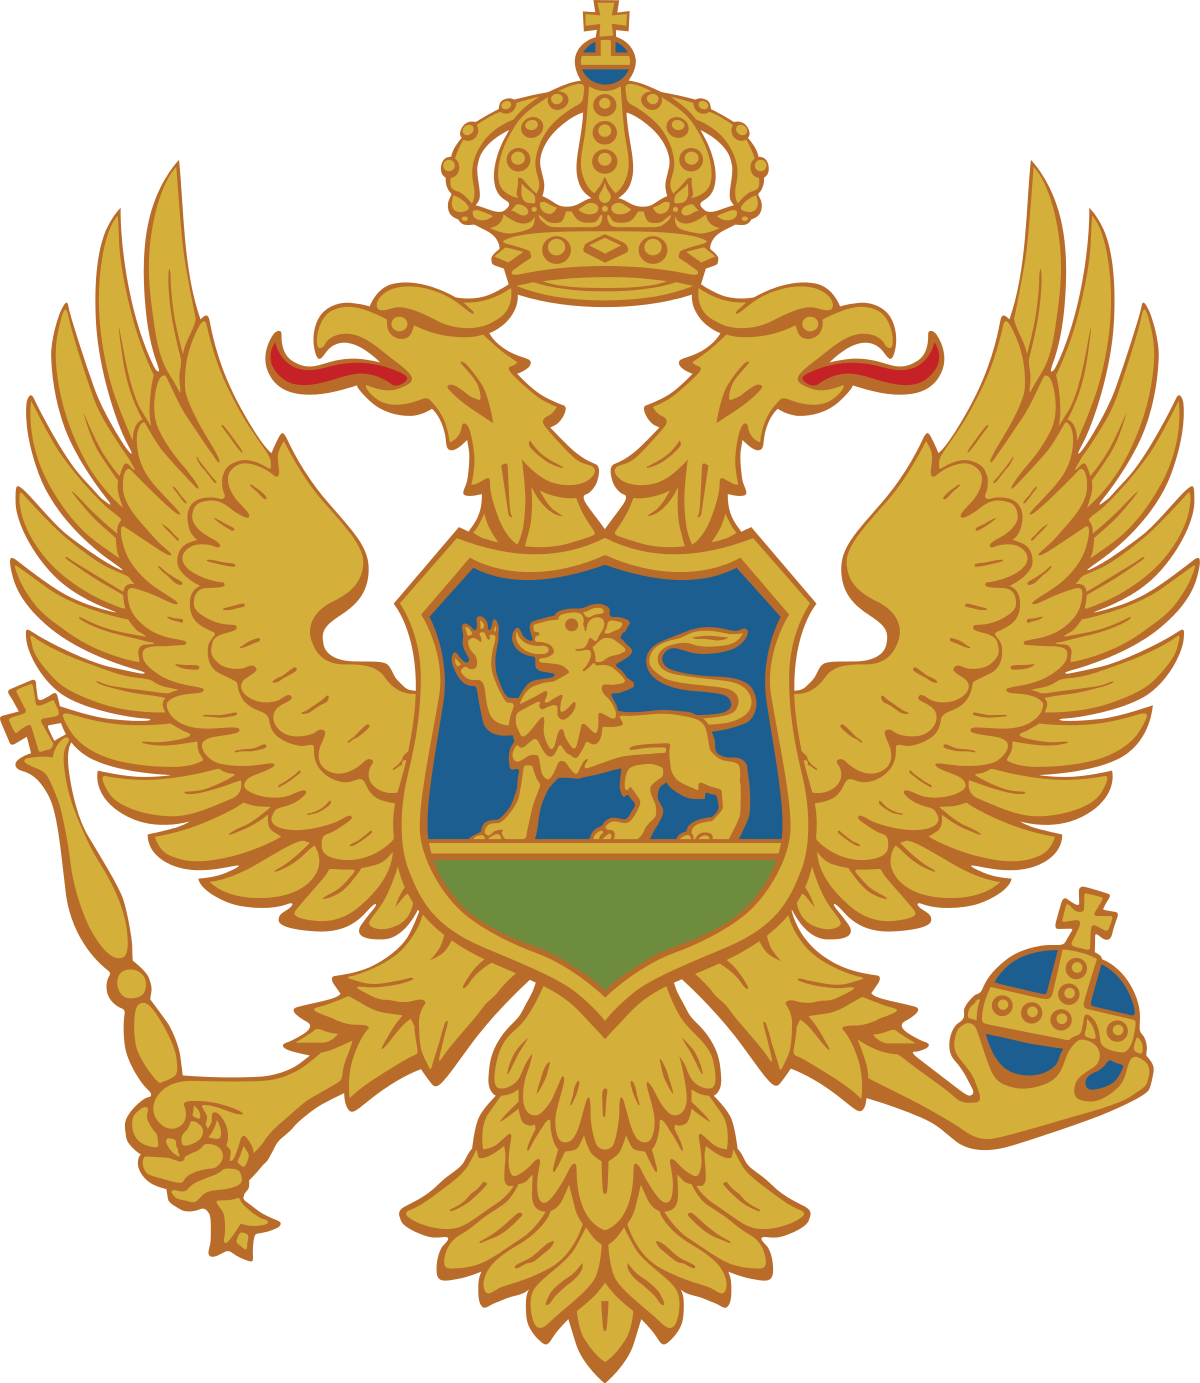 Coat of arms of Montenegro